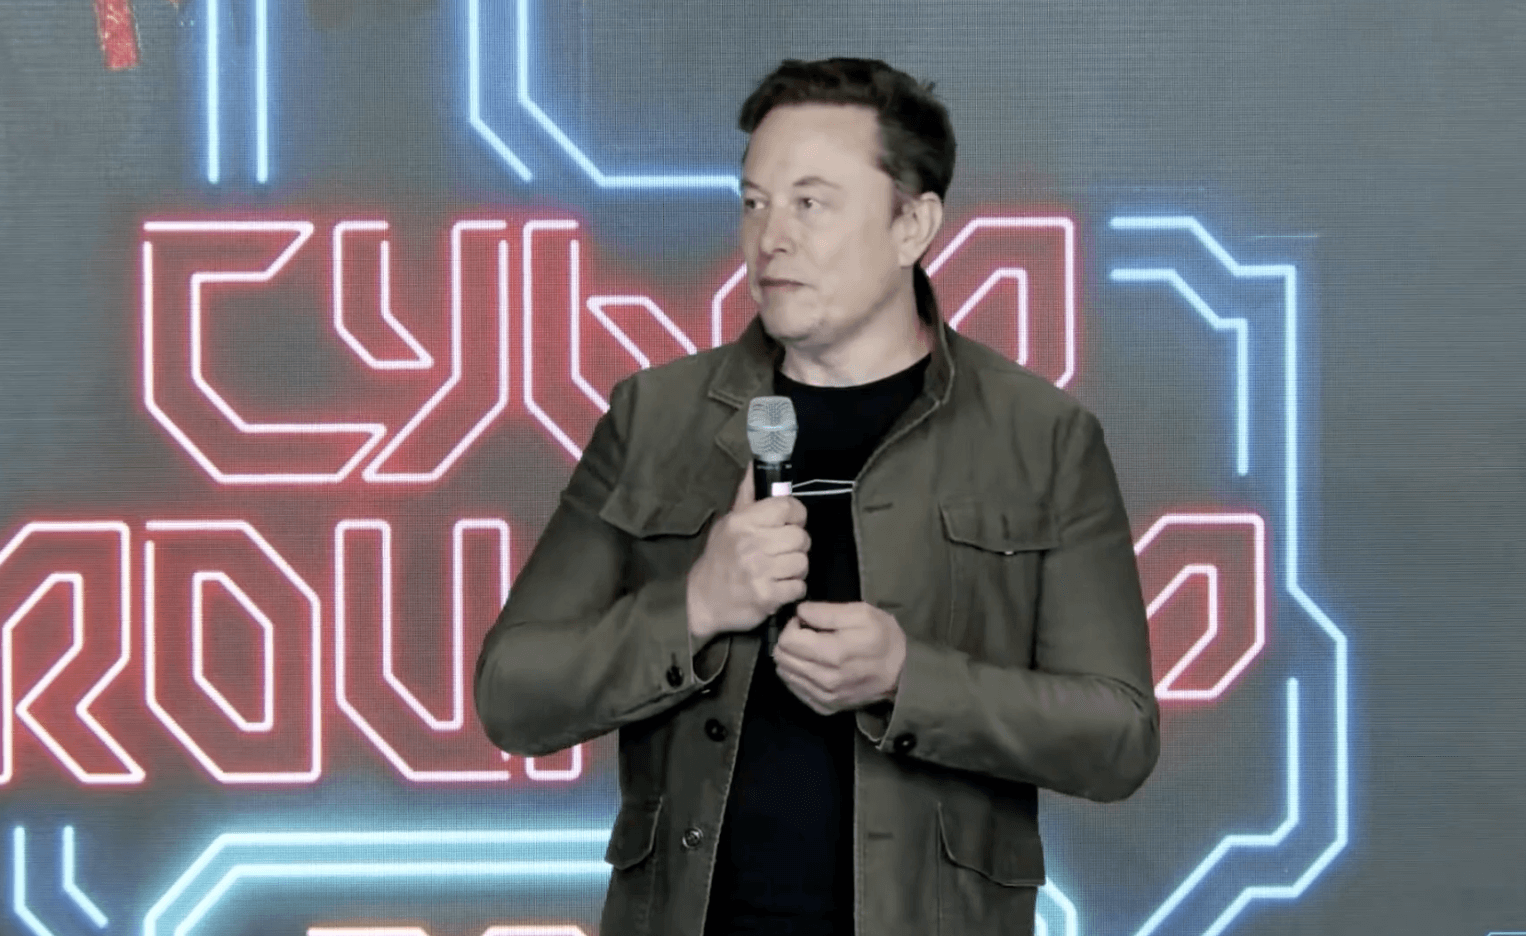 BREAKTHROUGH: At long last Elon Musk has invented something